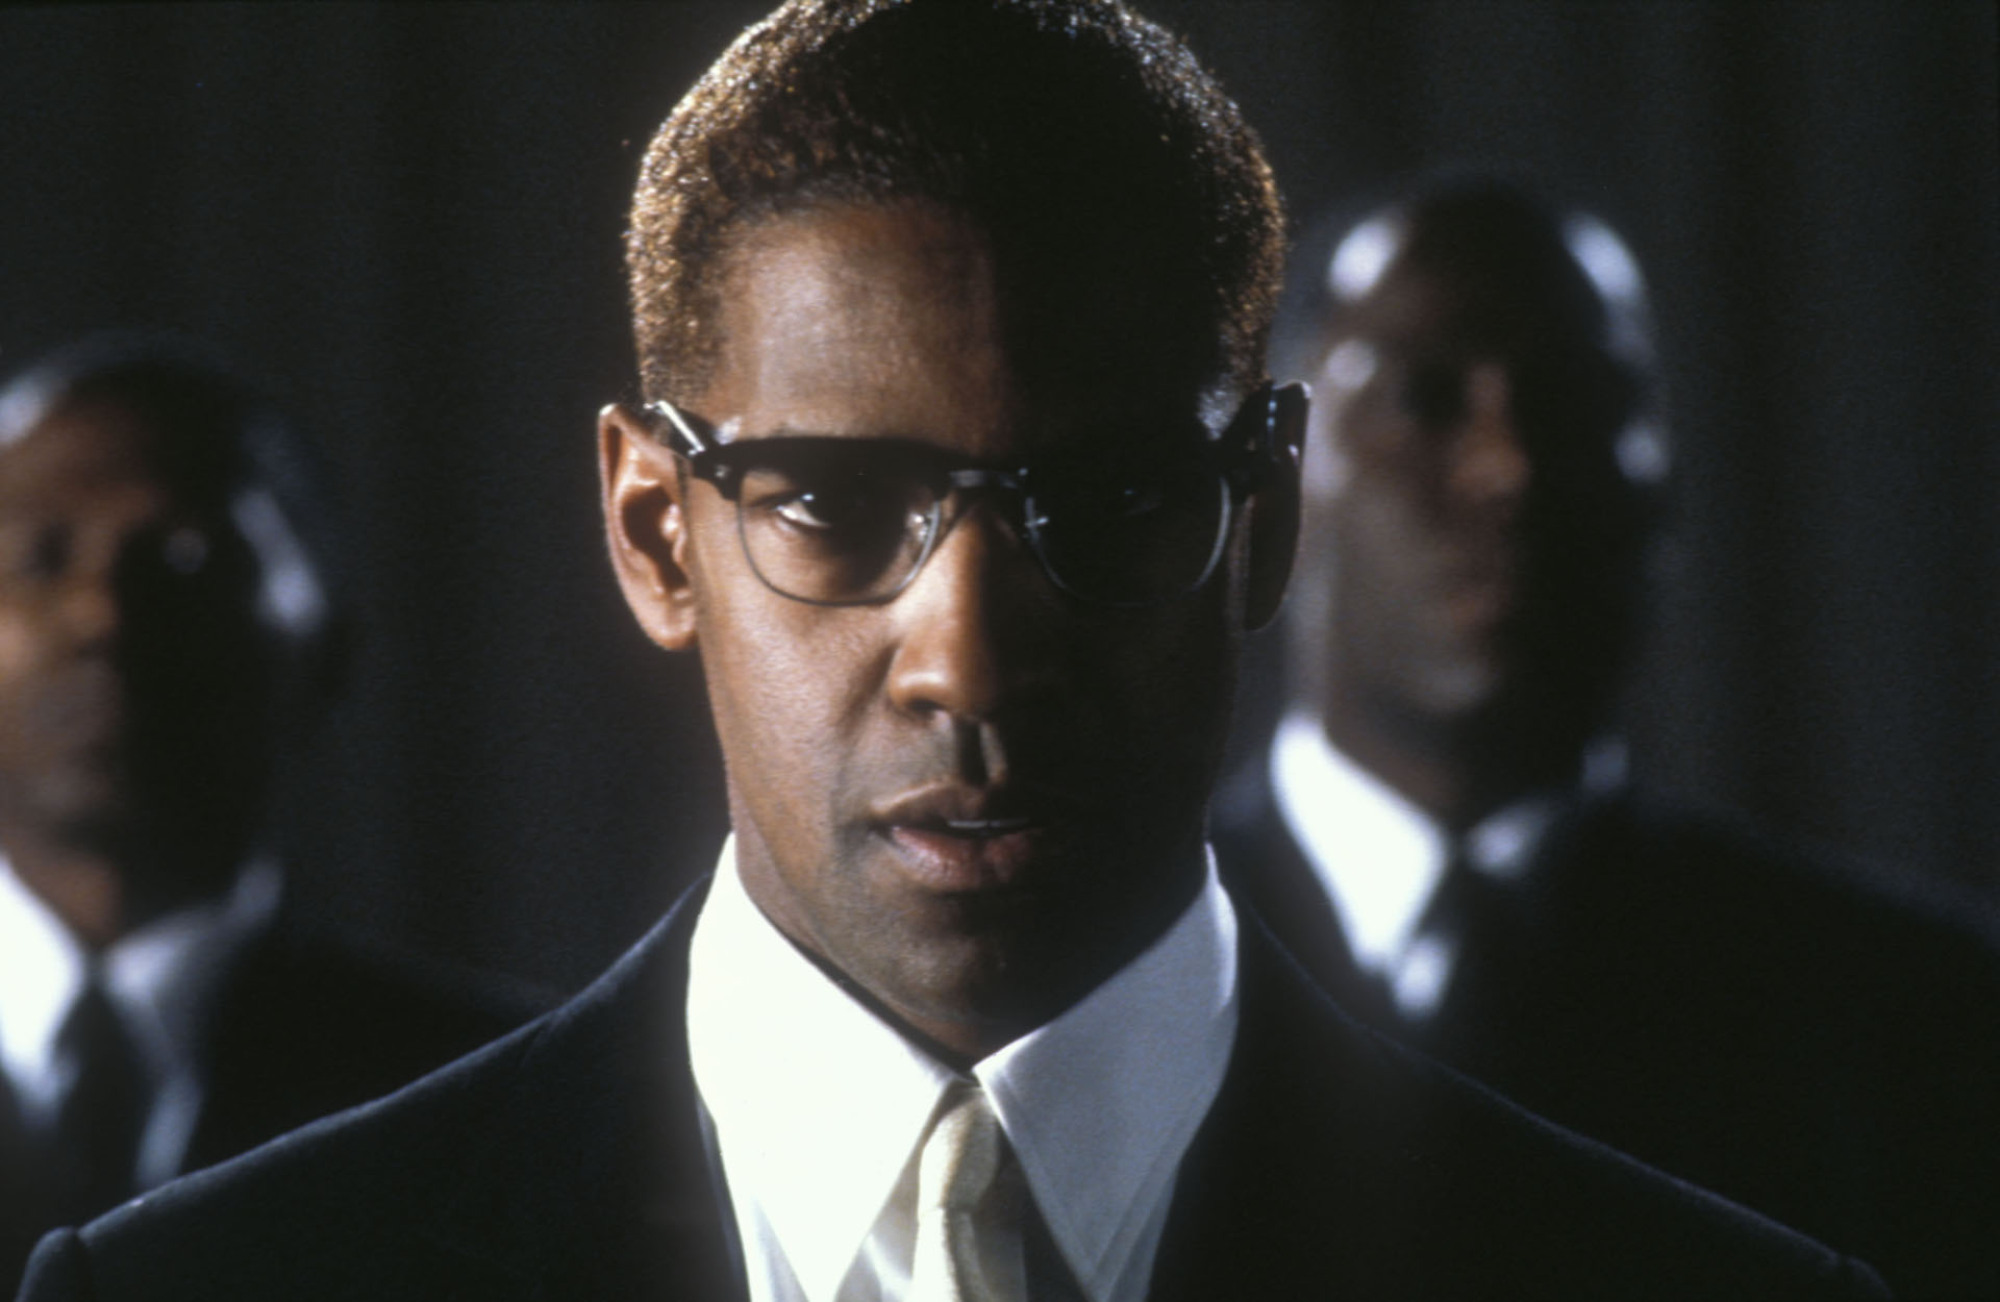 A Black man wearing a suit faces forward